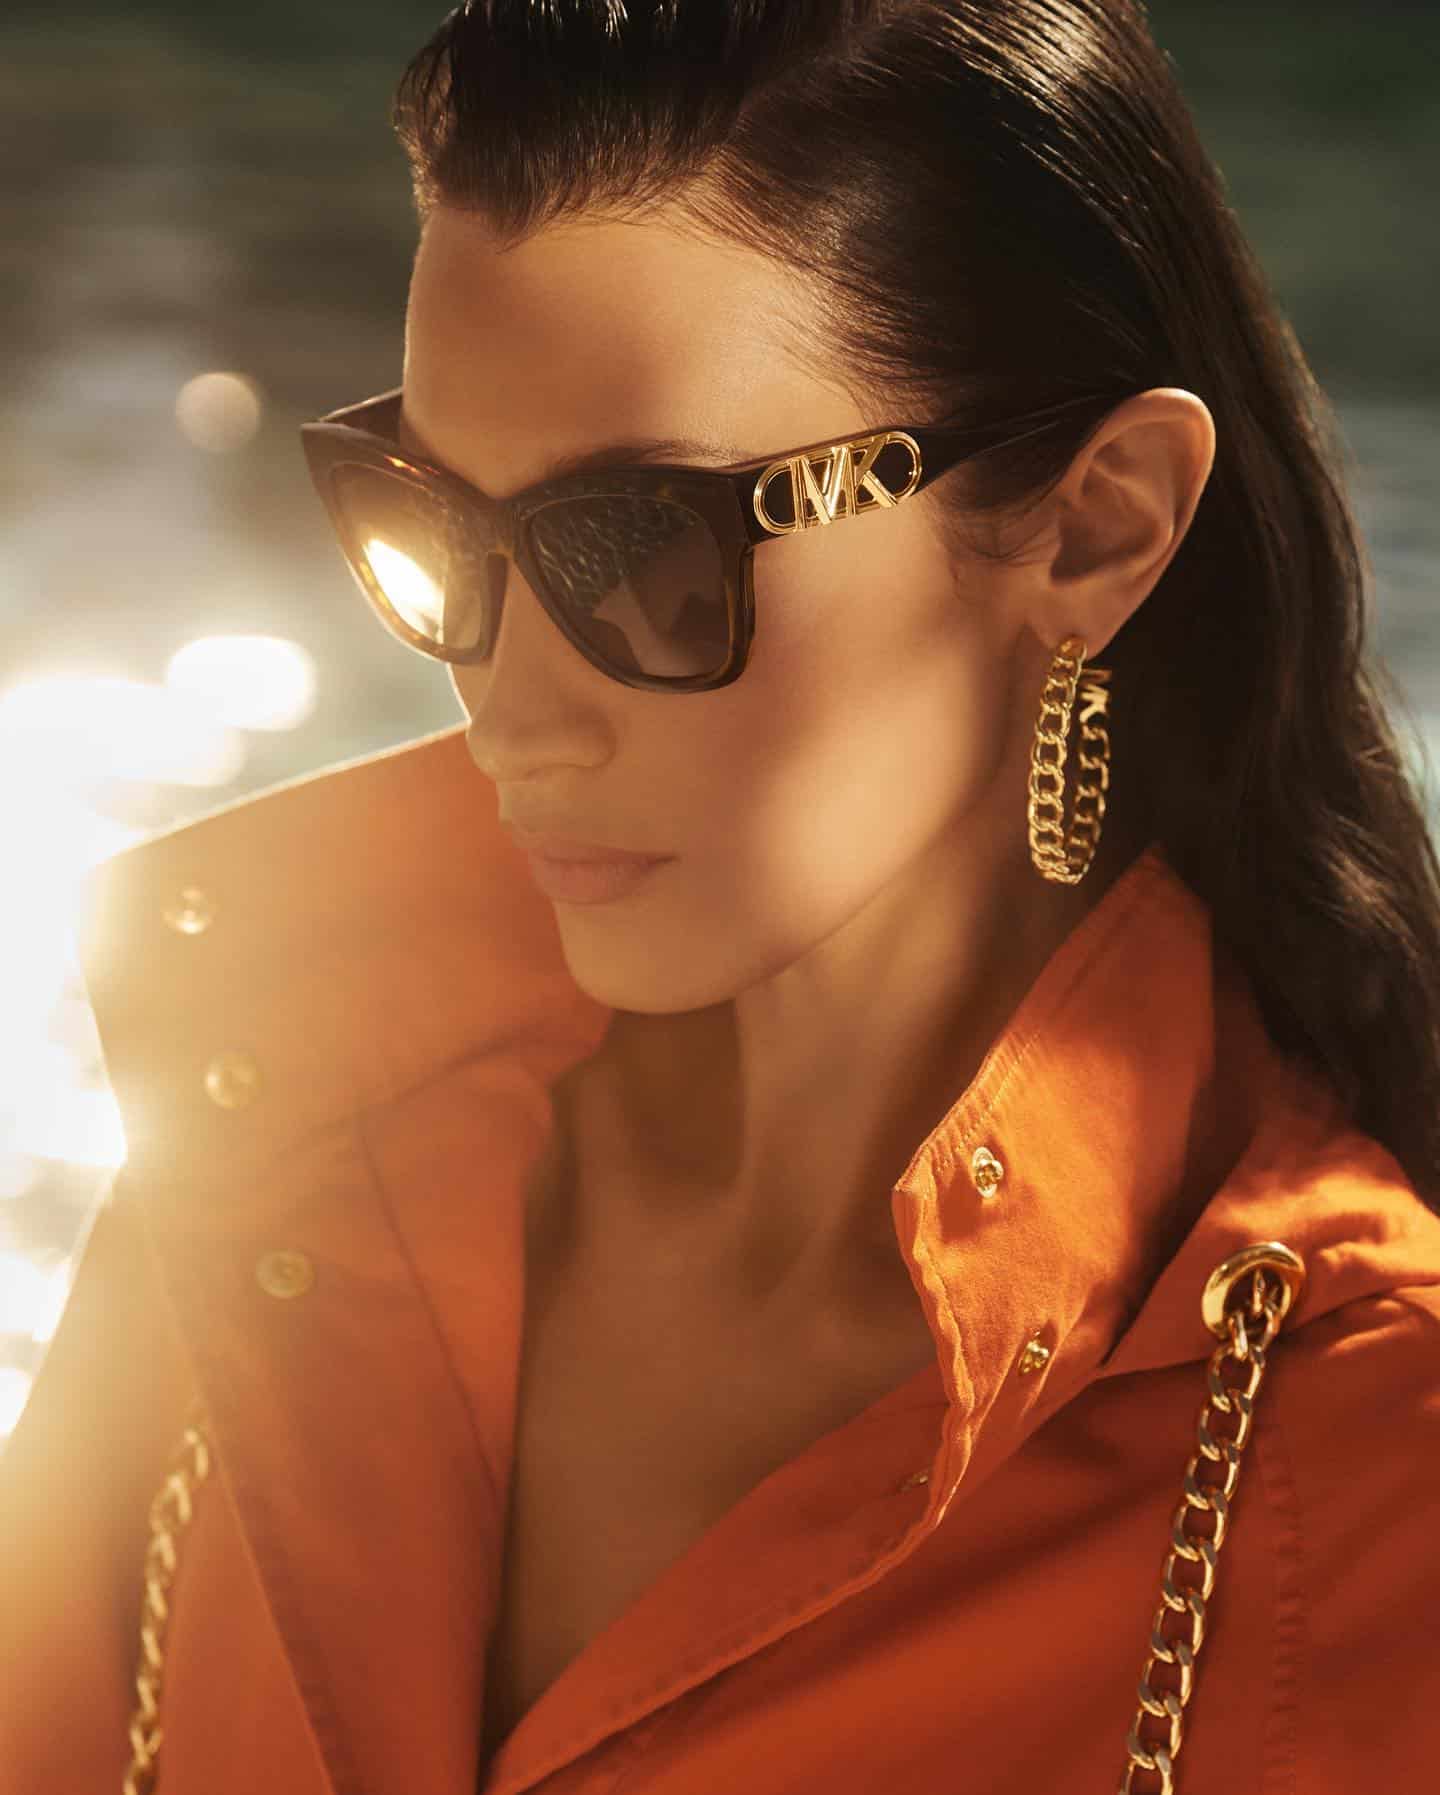 Bella Hadid looks amazing in Michael Kors sunglasses